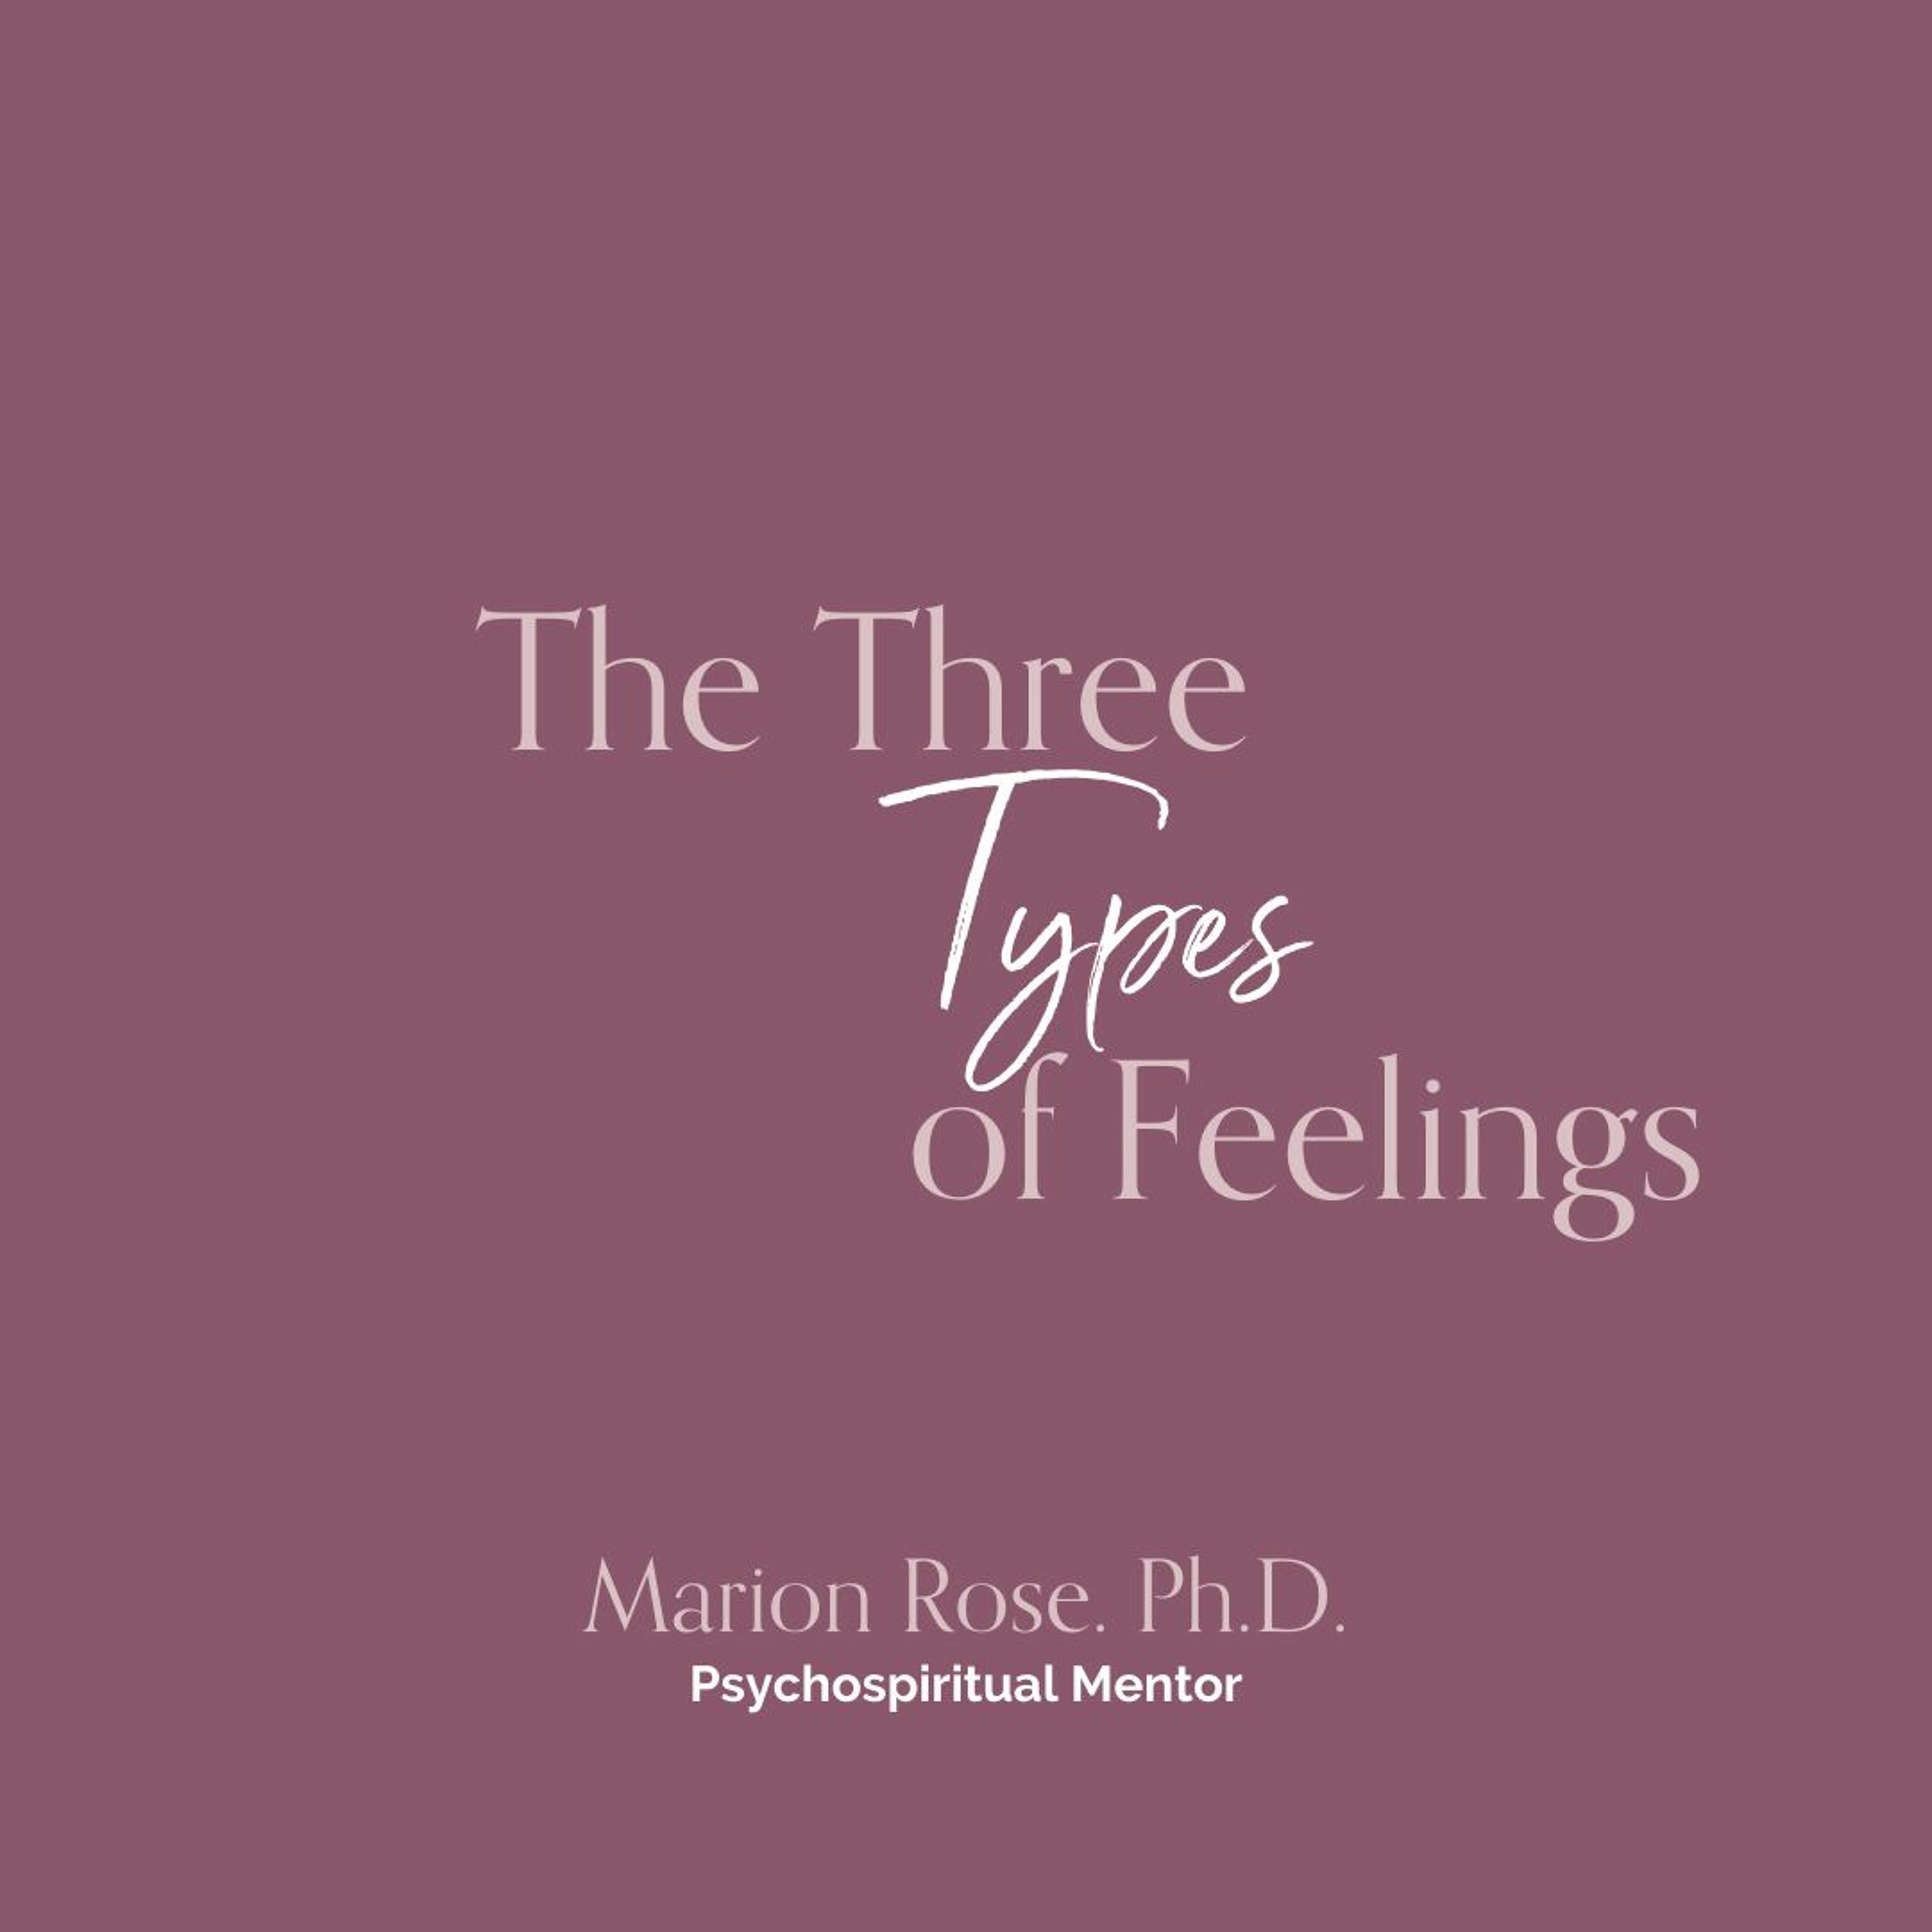 The Three Types of Feelings